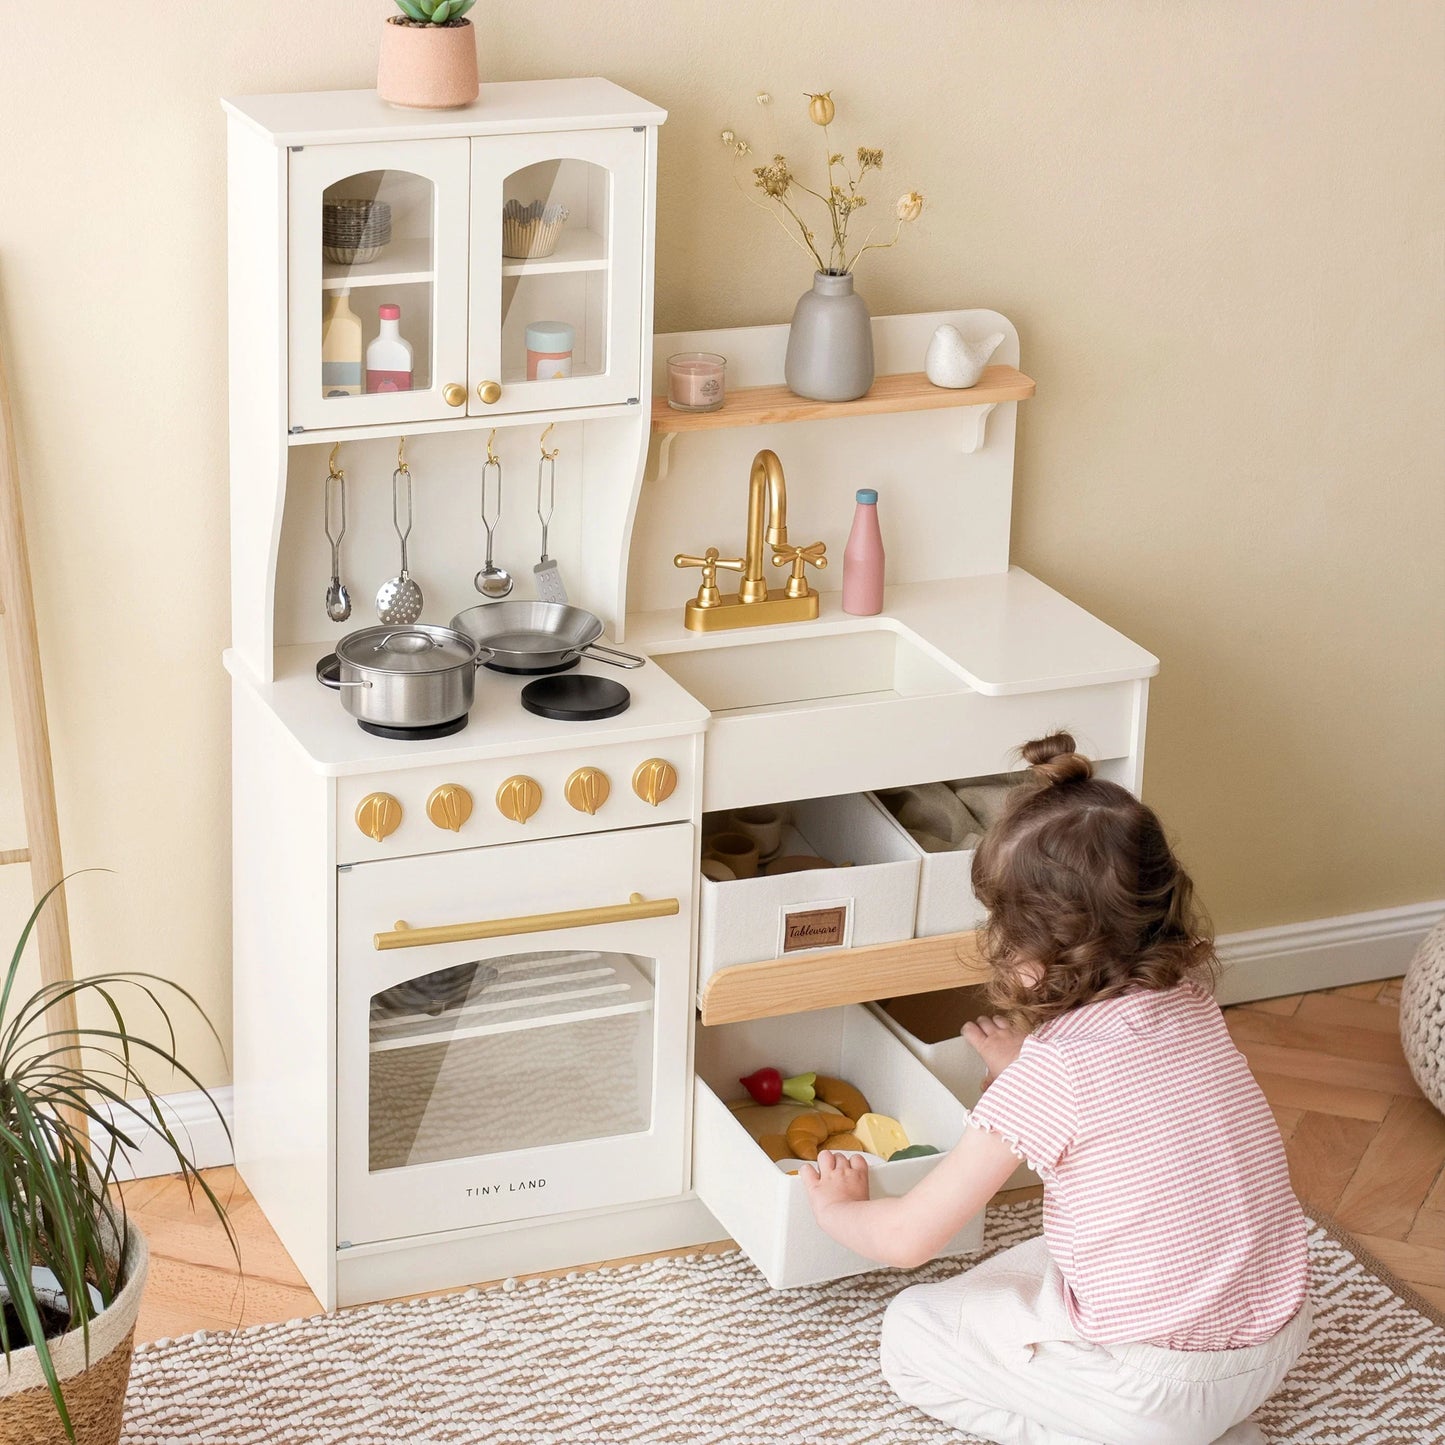 Children's Kitchen Play Set, Montessori Play Kitchen